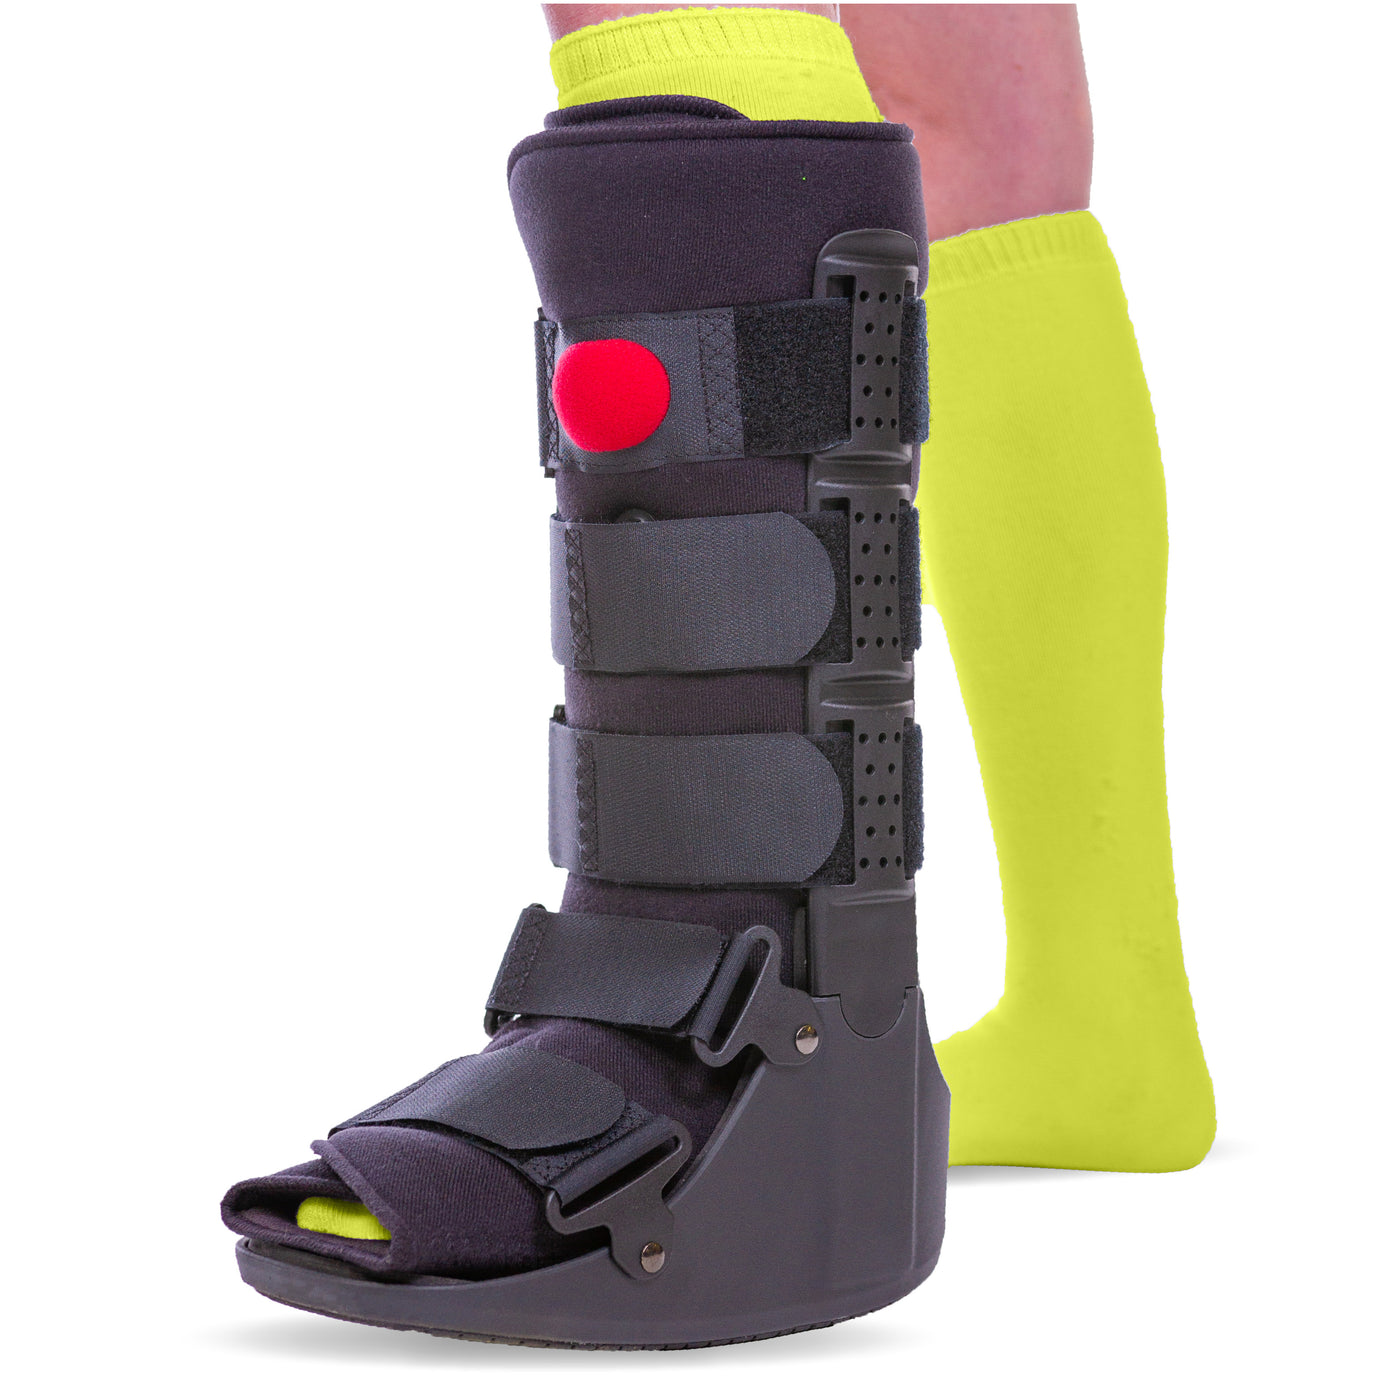 Standard Walking Boot - United Ortho